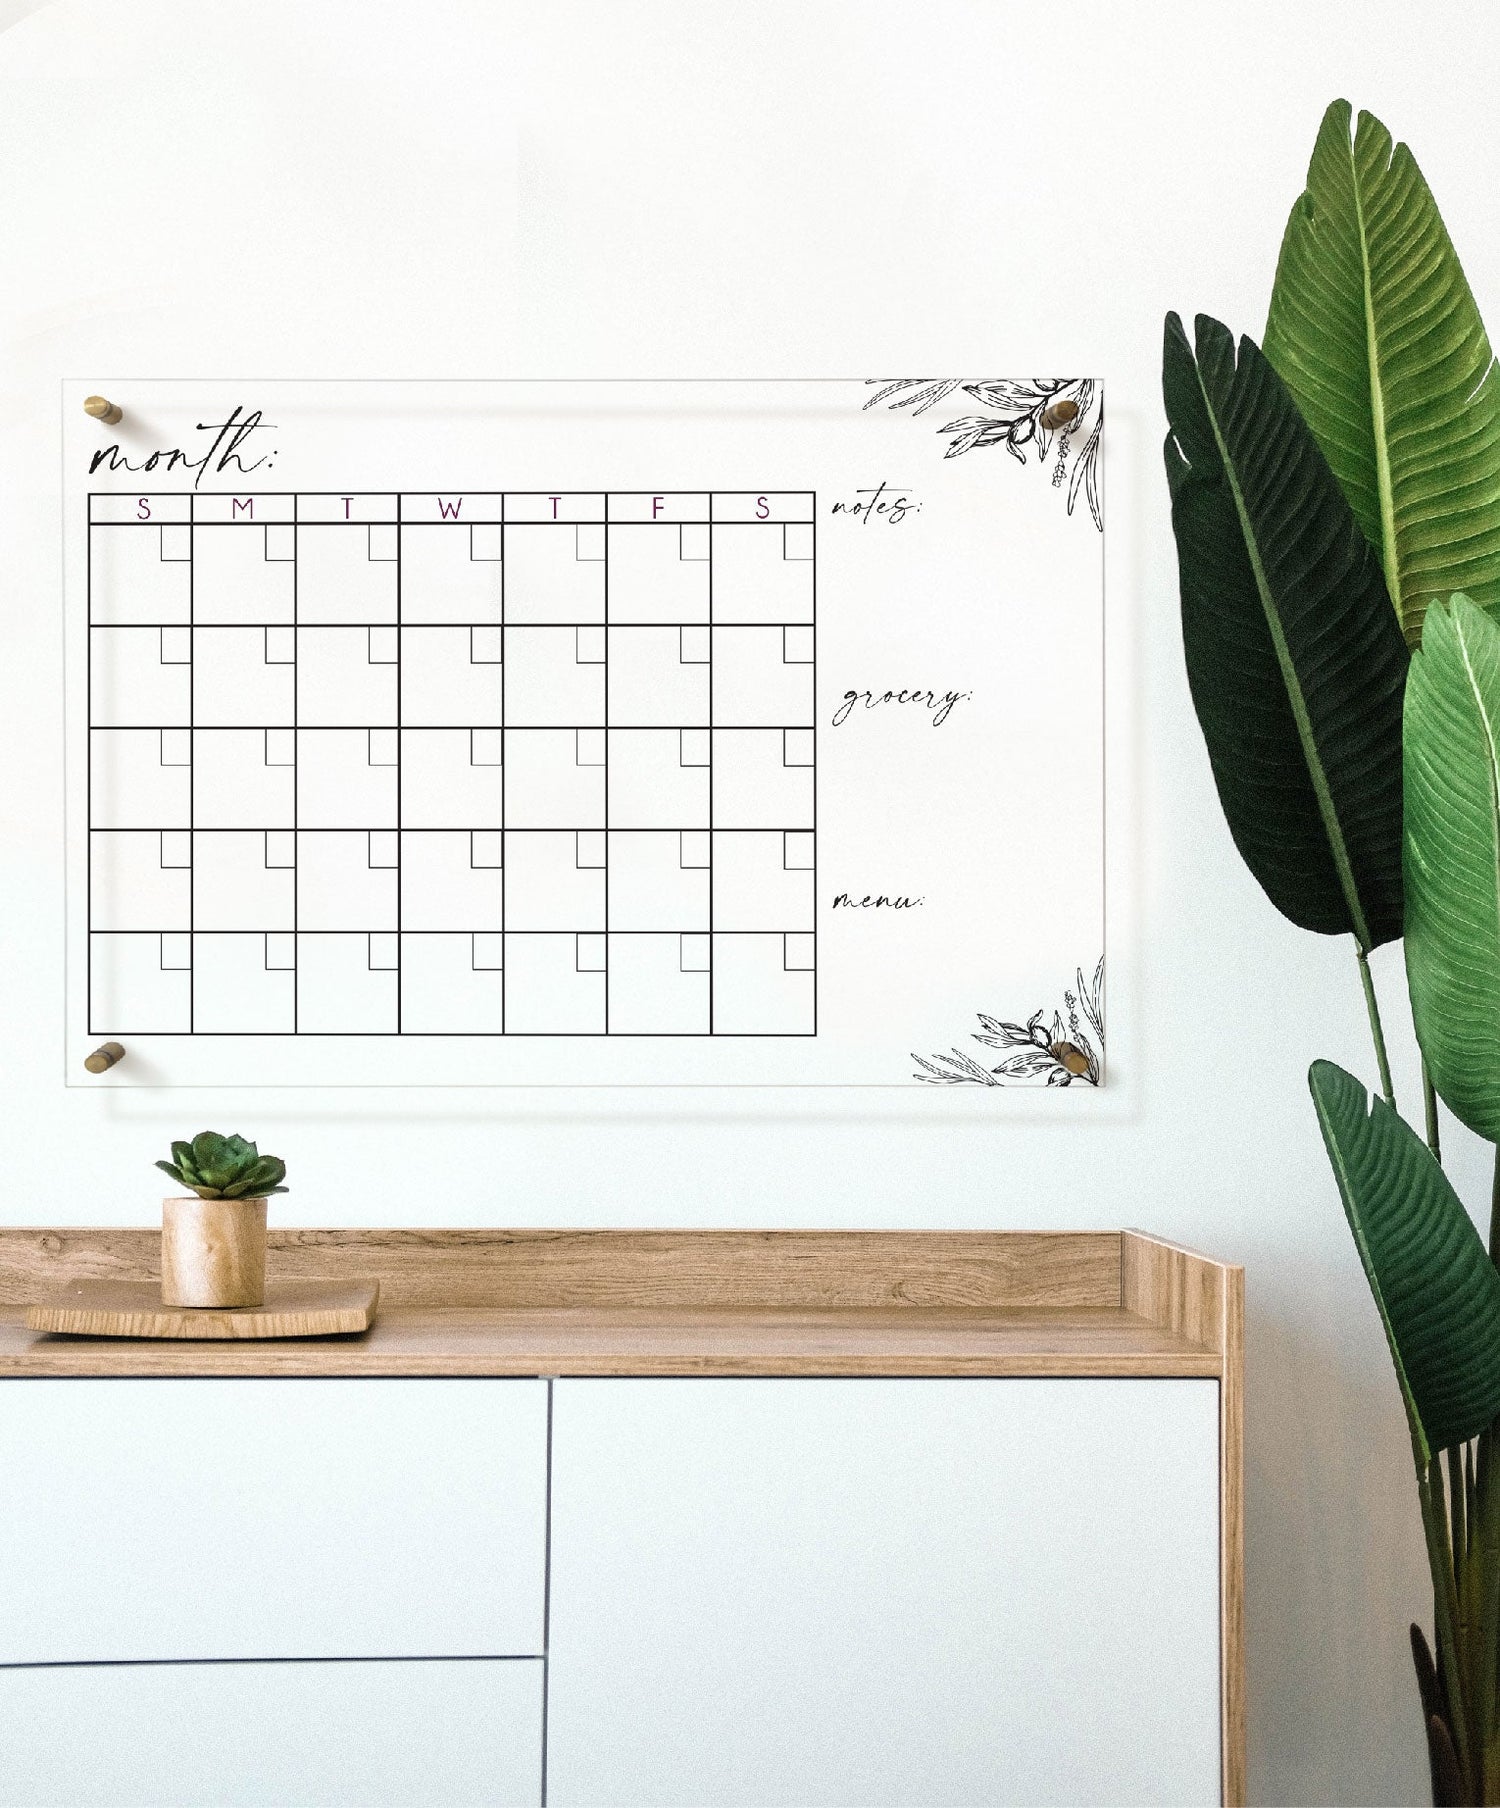 Acrylic Dry Erase Calendar For Wall | Monthly Acrylic Calendar Home Decor | SCC-260 - SCC Signs